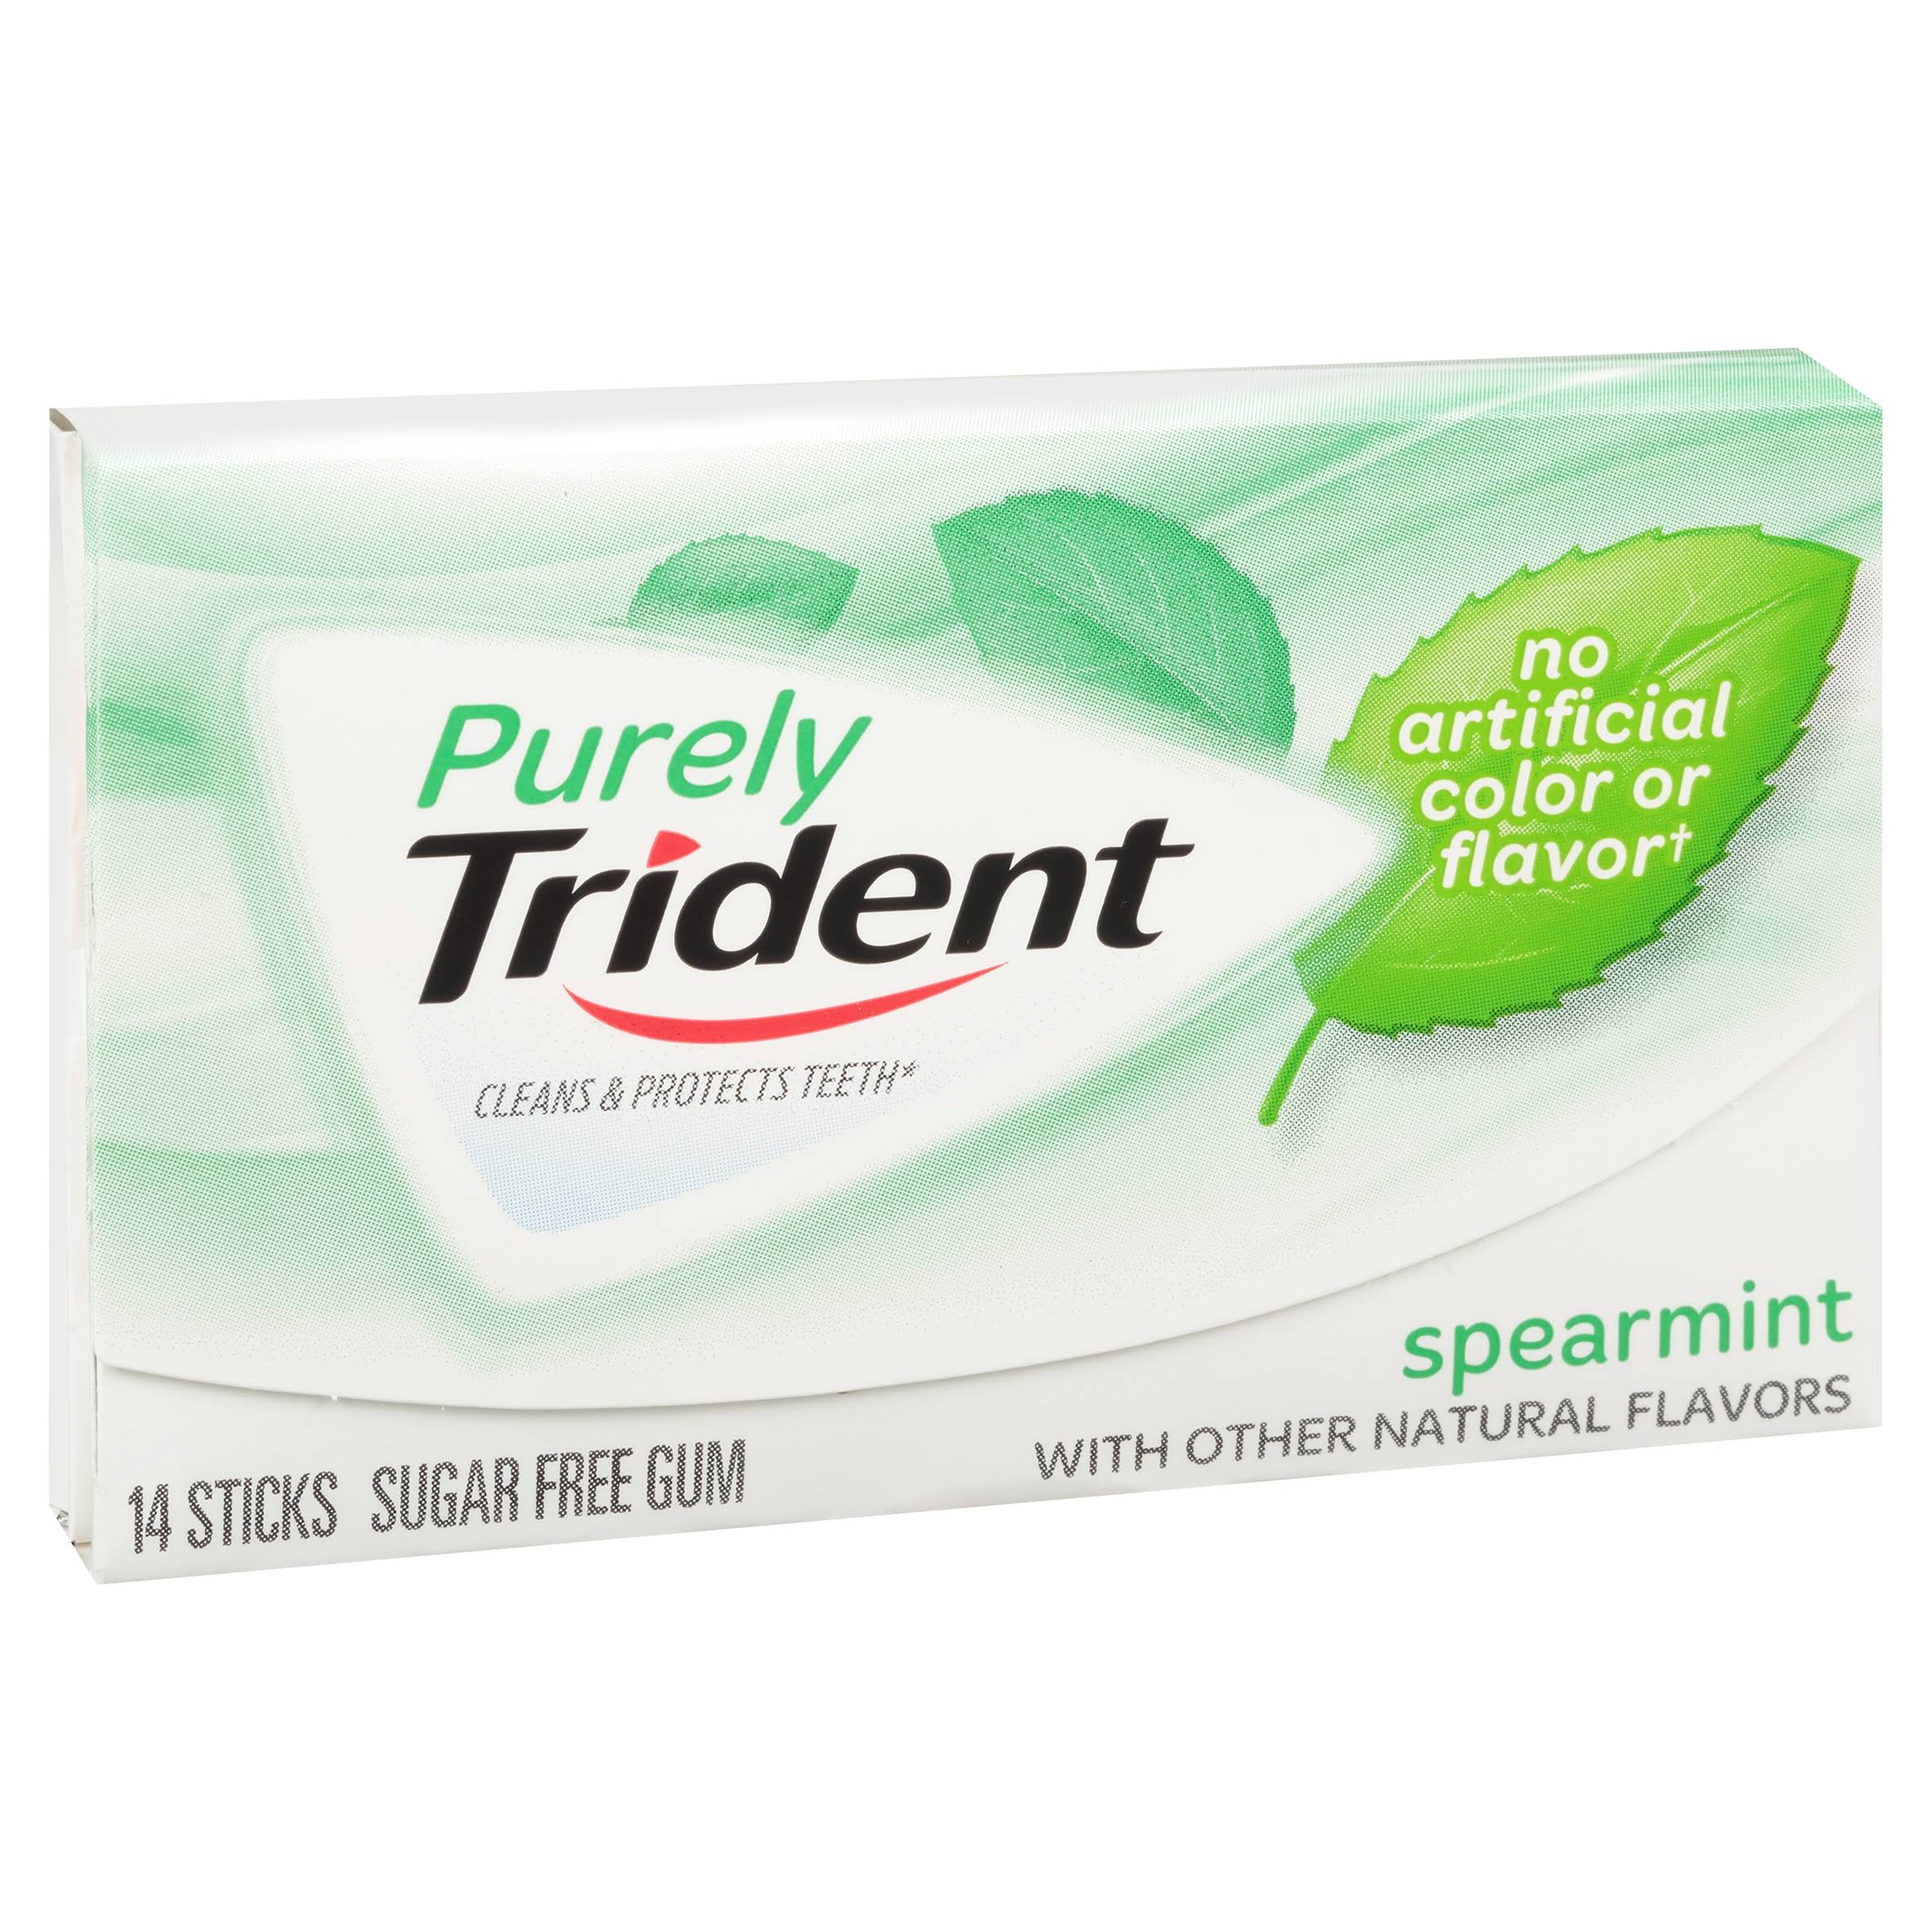 Purely Trident Sugar Free Gum - Spearmint, 14 Sticks